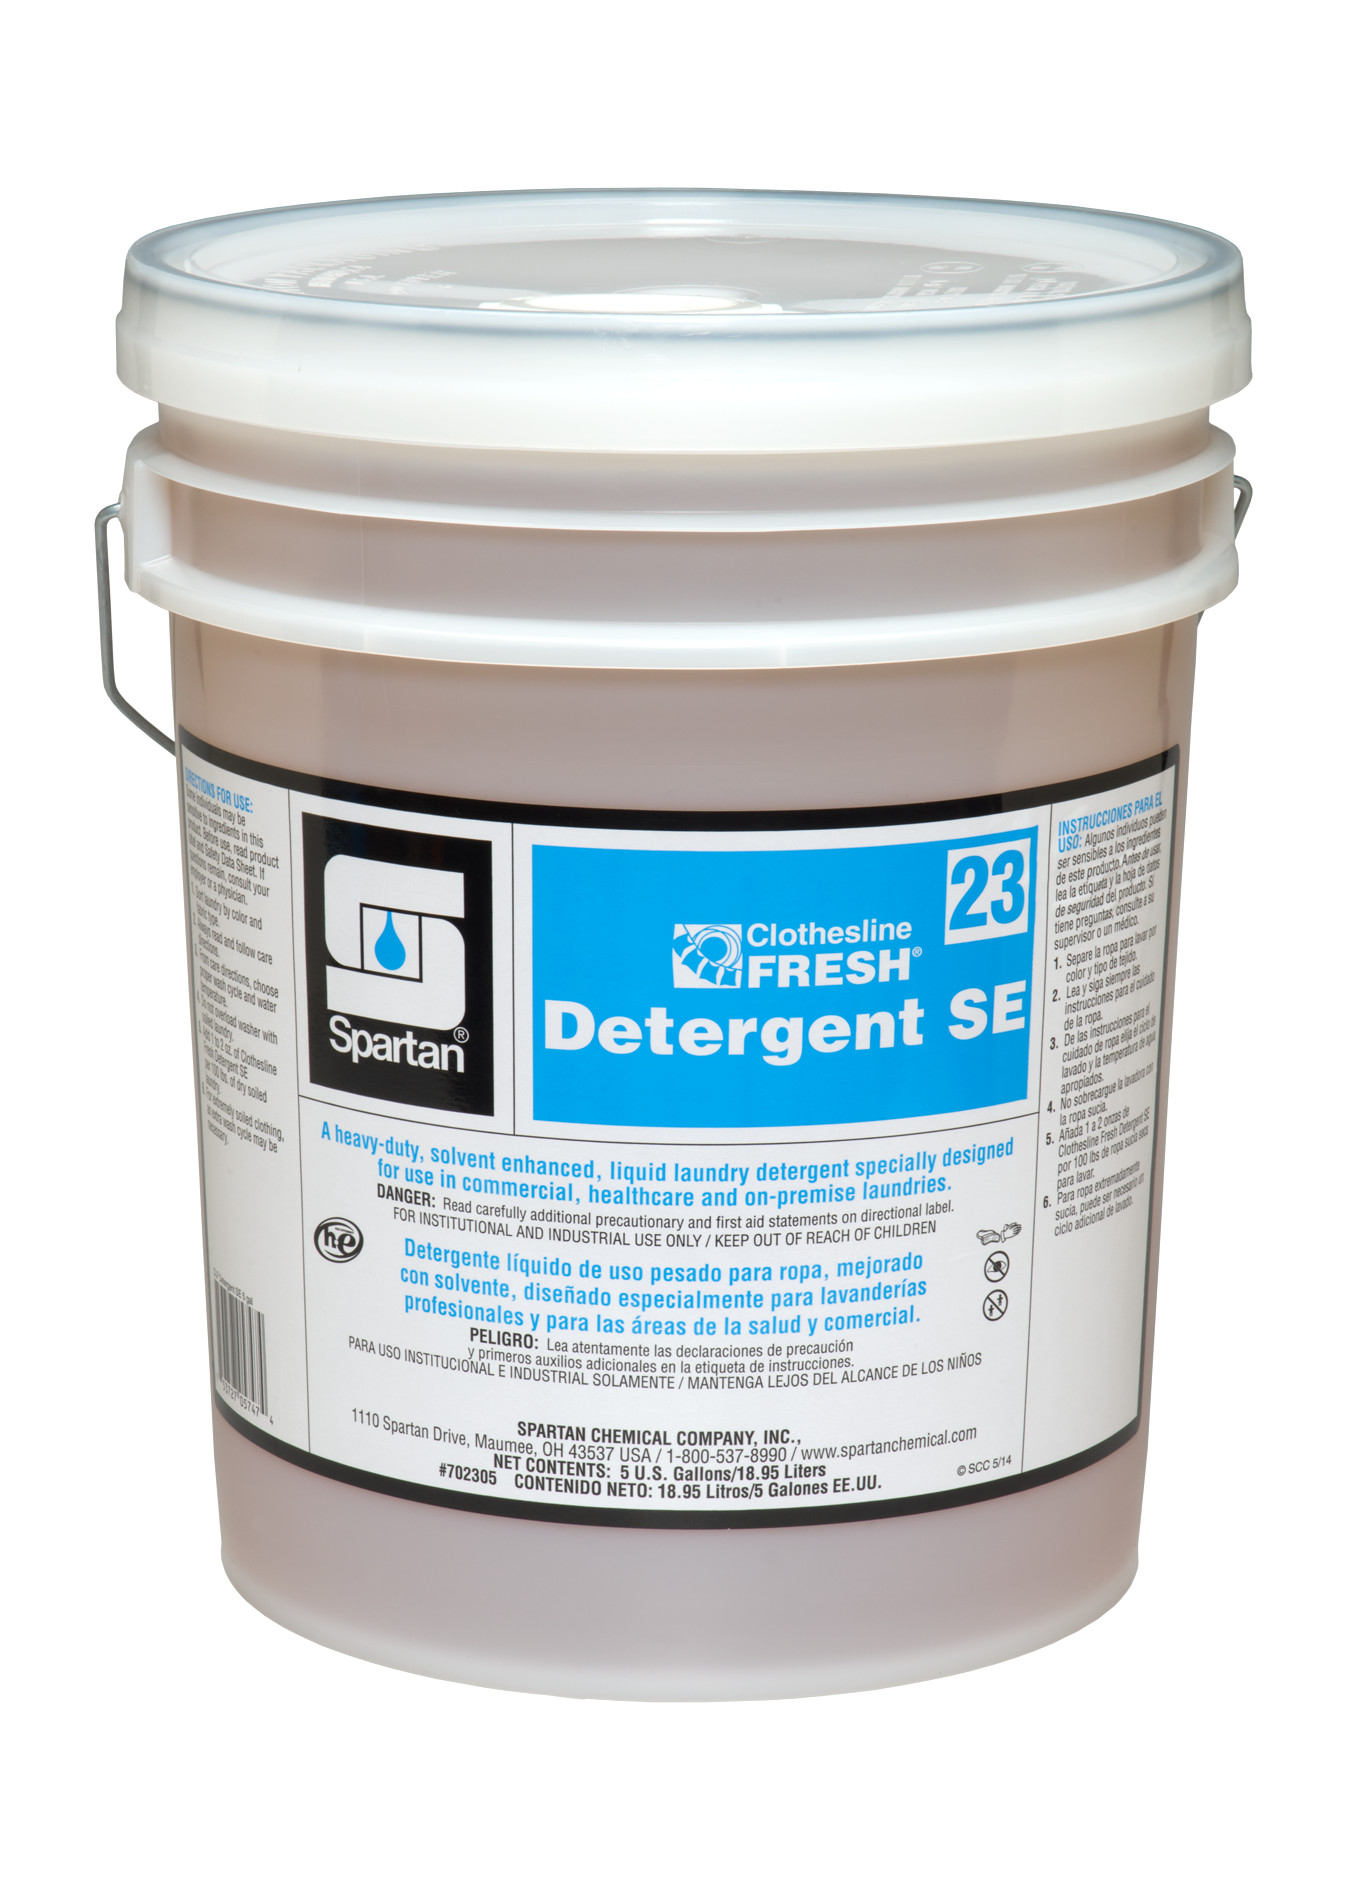 Spartan Chemical Company Clothesline Fresh Detergent SE 23, 5 GAL PAIL